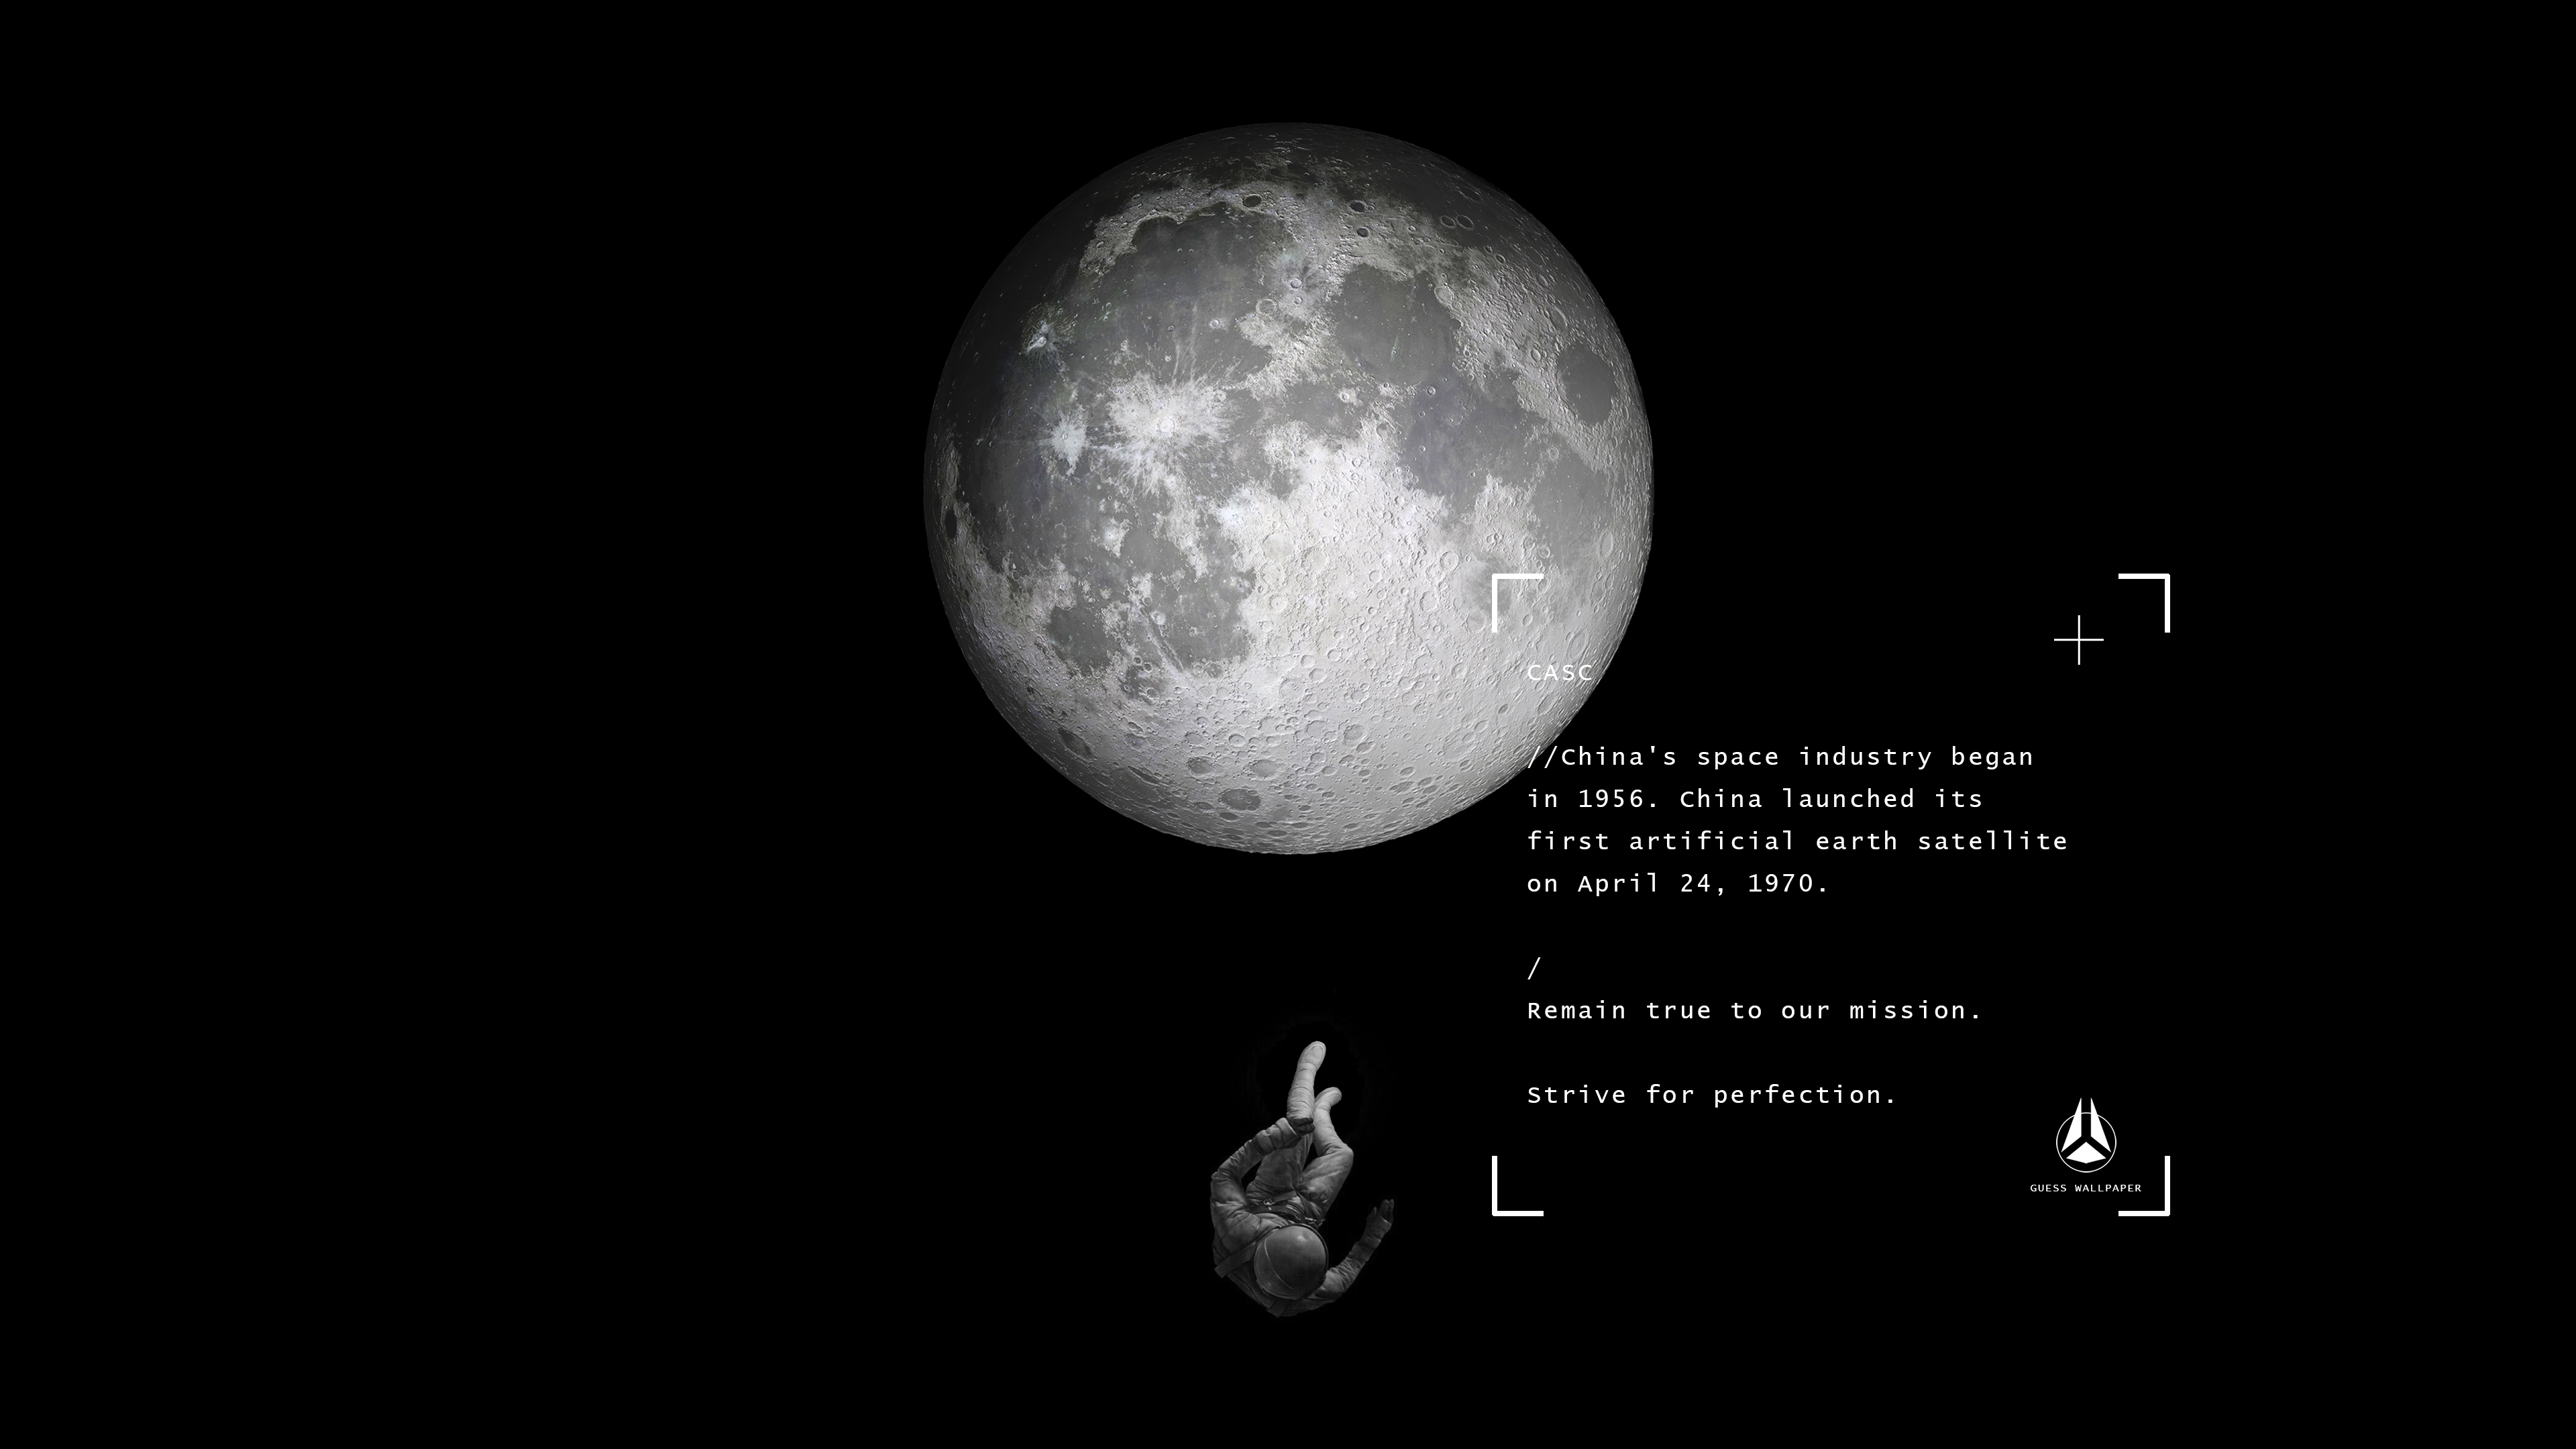 General 3840x2160 space Moon astronaut digital art fantasy art minimalism simple background black background